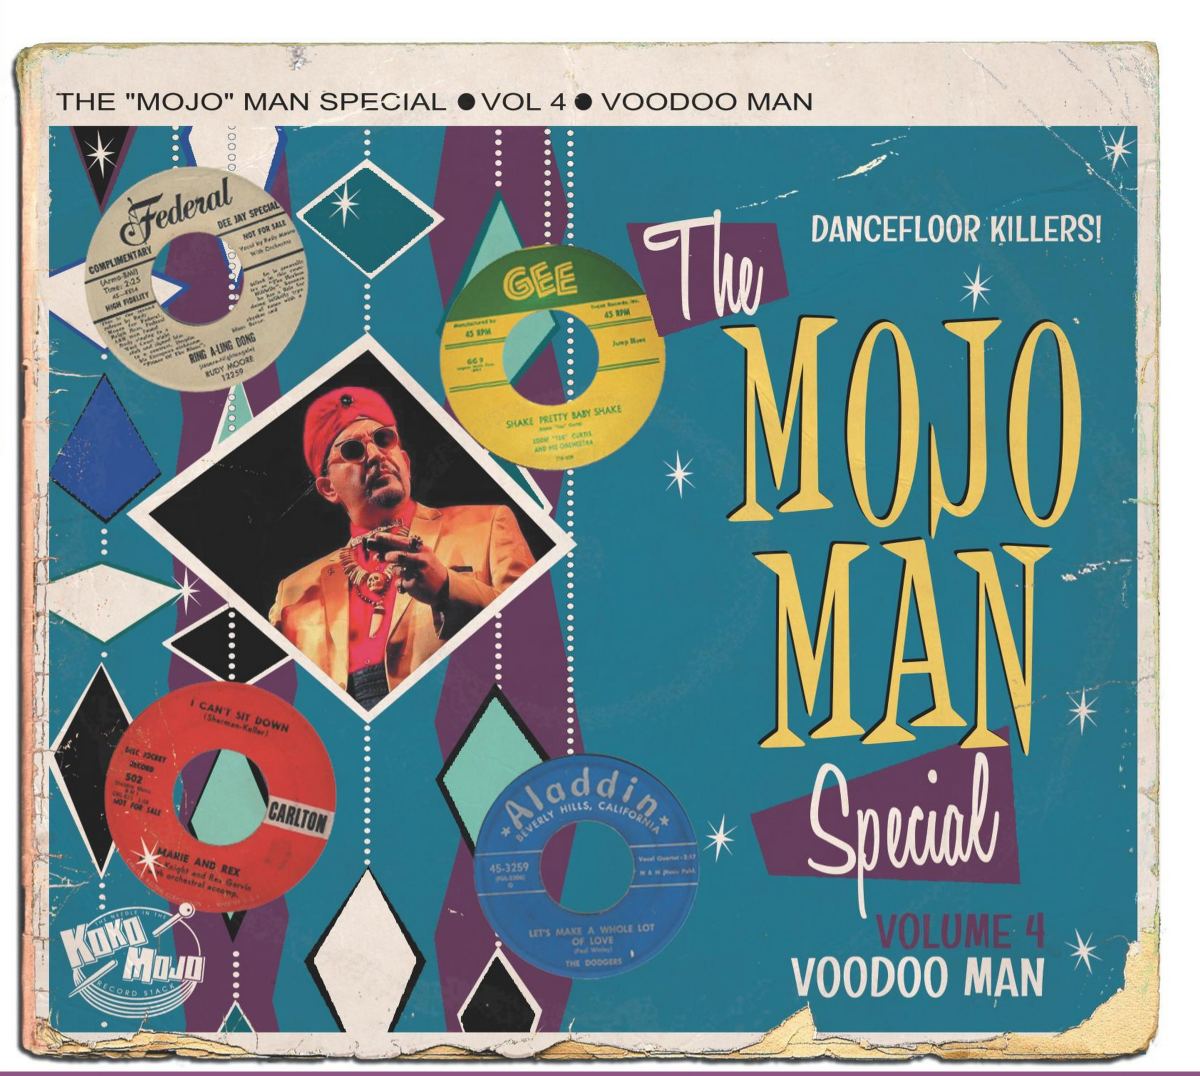 The MOJO MAN Special Volume #4